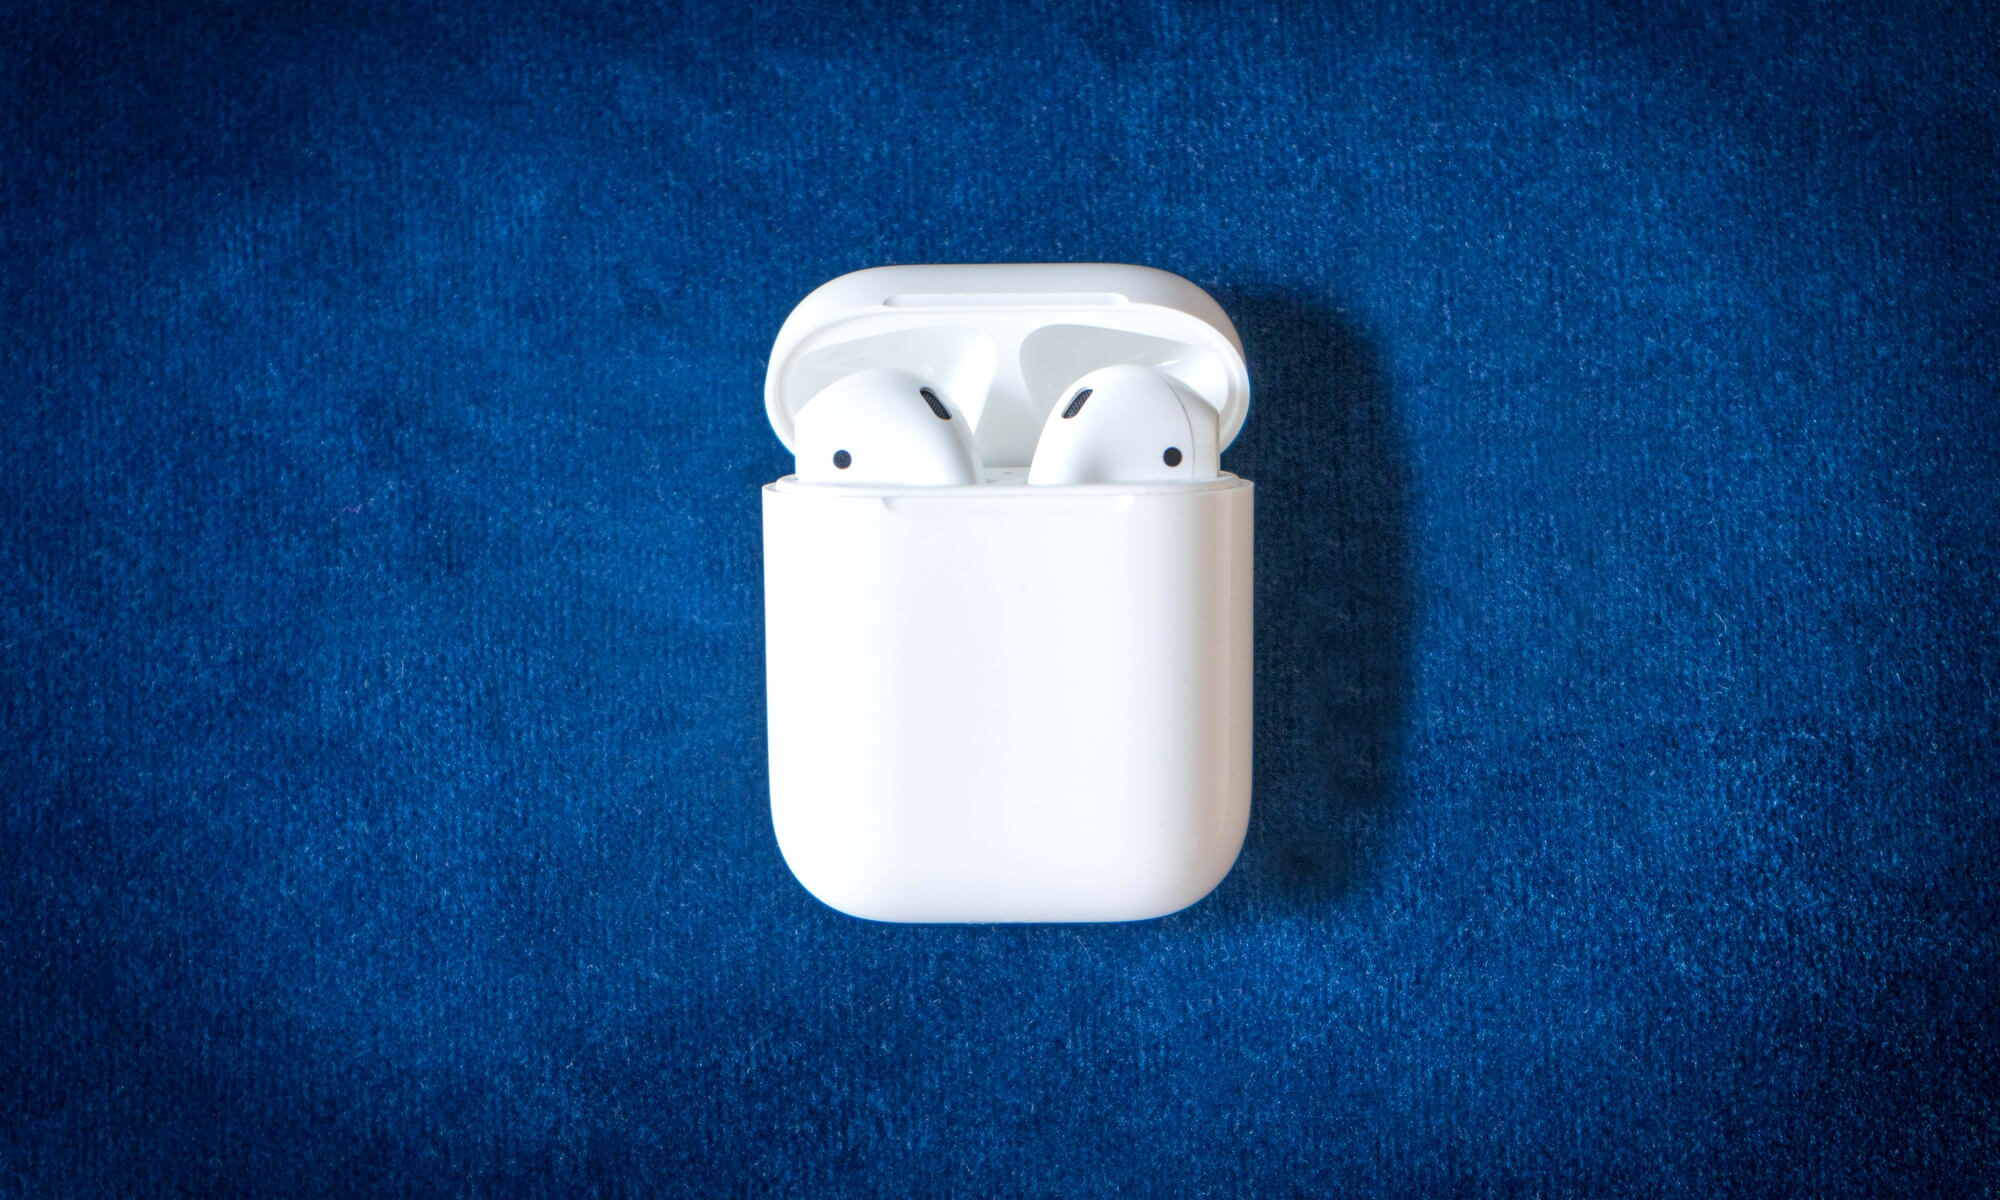 Наушники Apple AirPods 2 и футляр для зарядки появились на фото